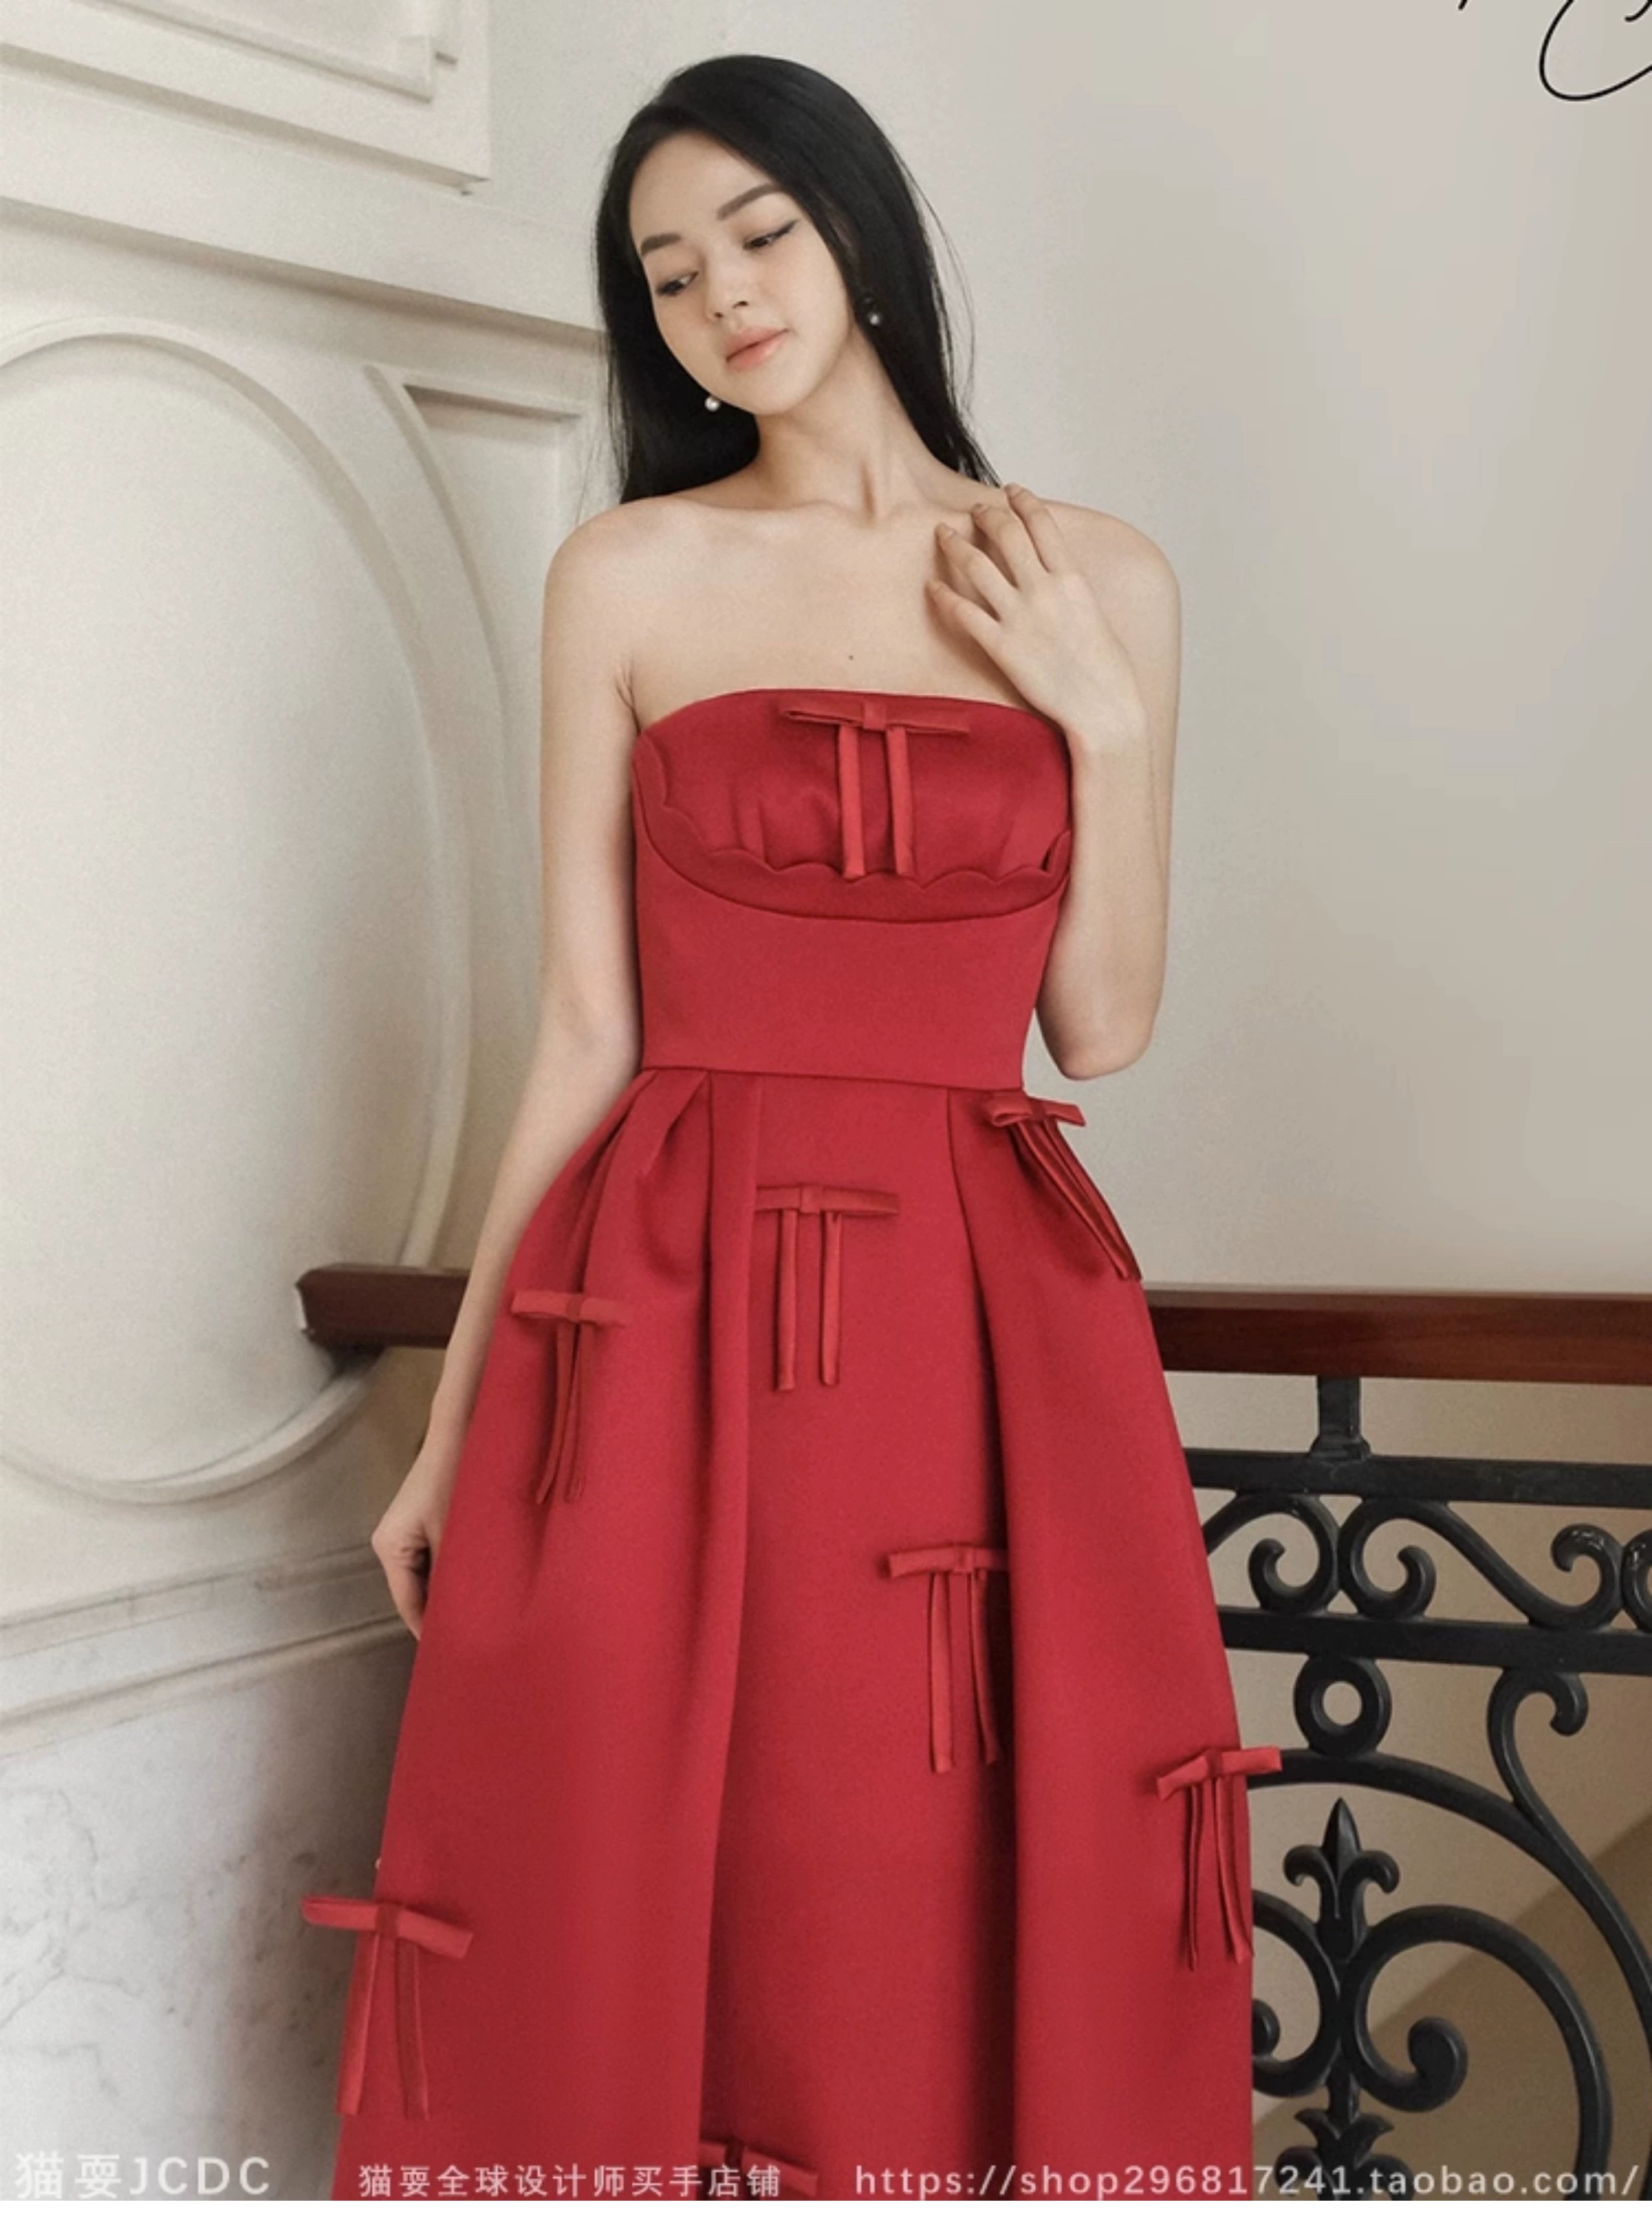 Solid Color Ribbon Sweet Dress【DEJA VU】ソリッドカラーリボンスウィートドレス